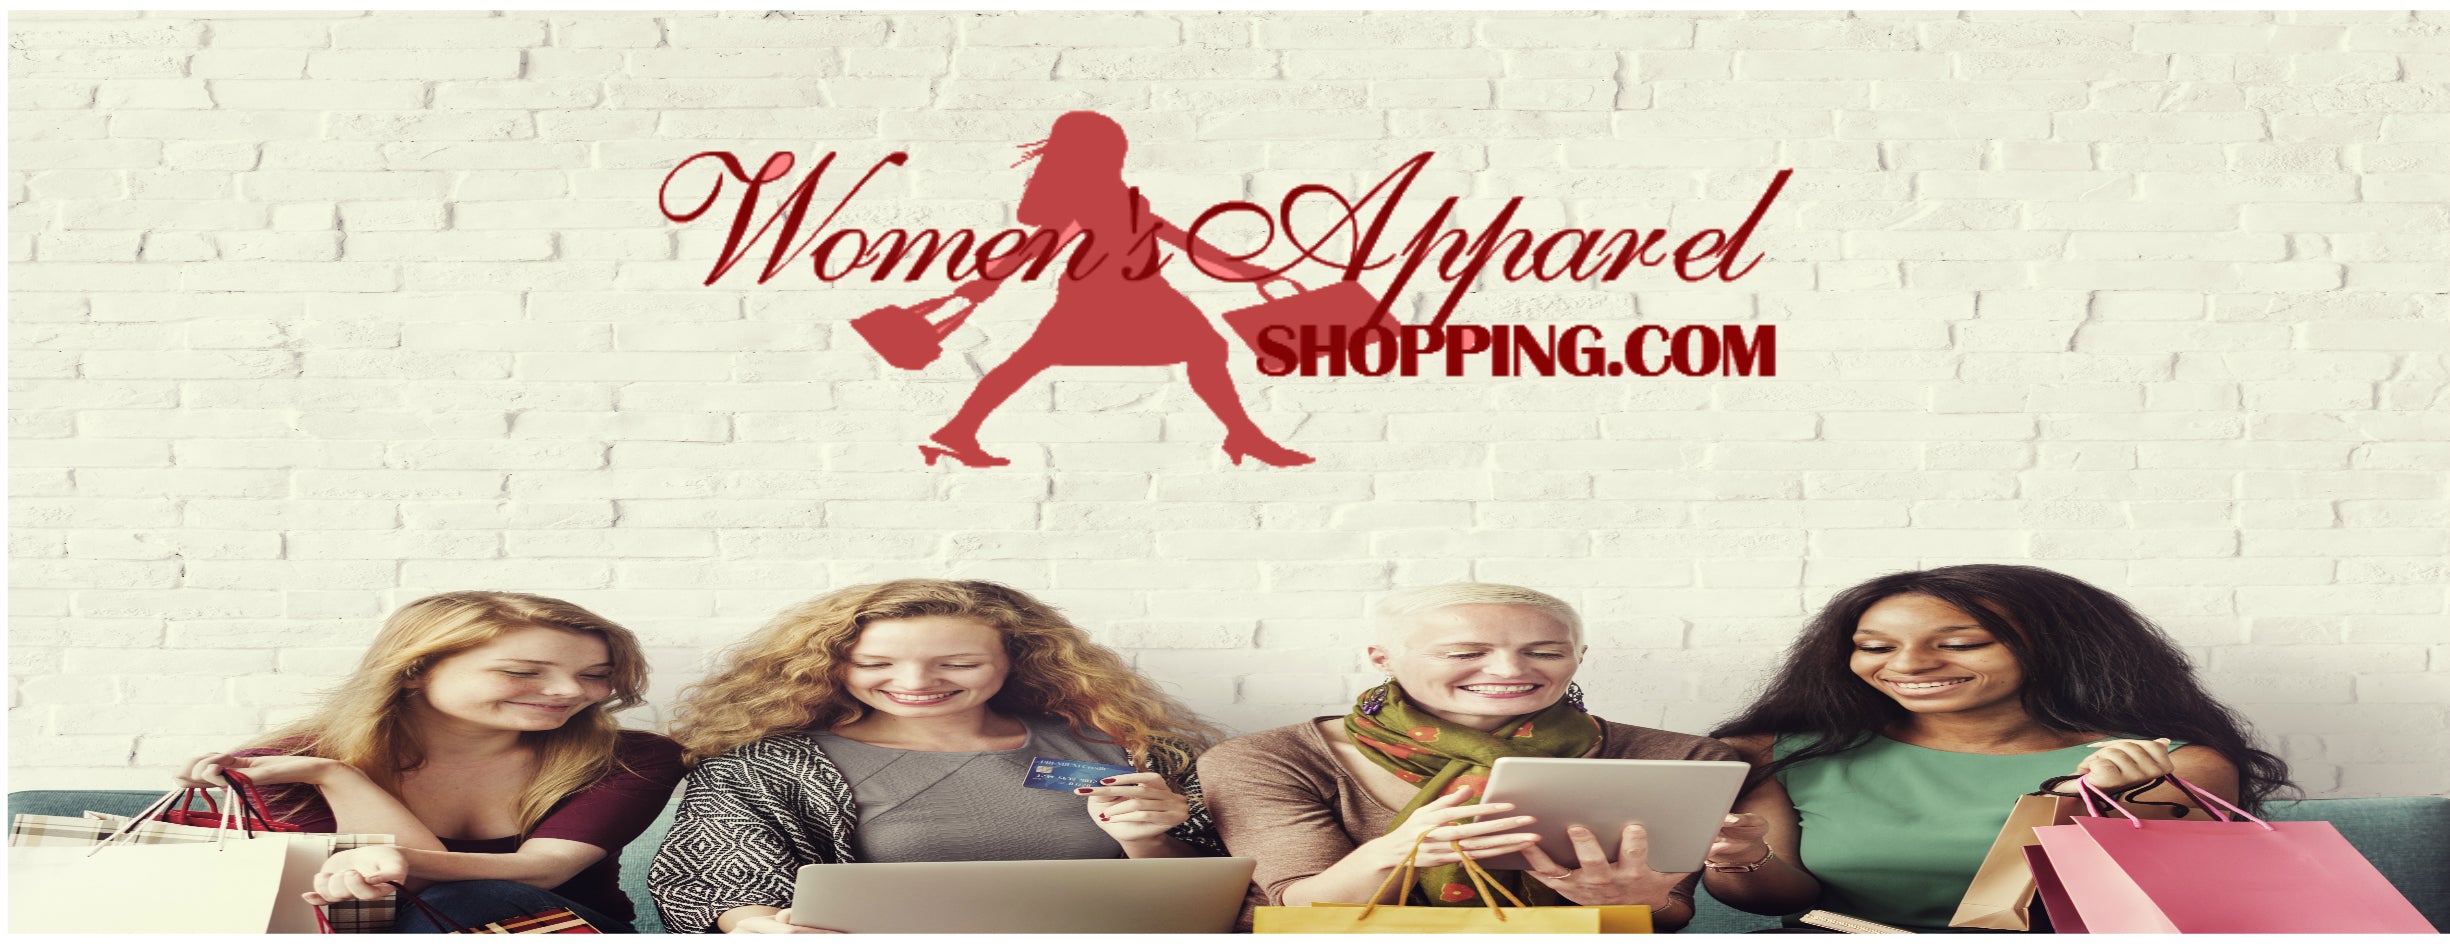 $10 - Women's Apparel Shopping (RED)